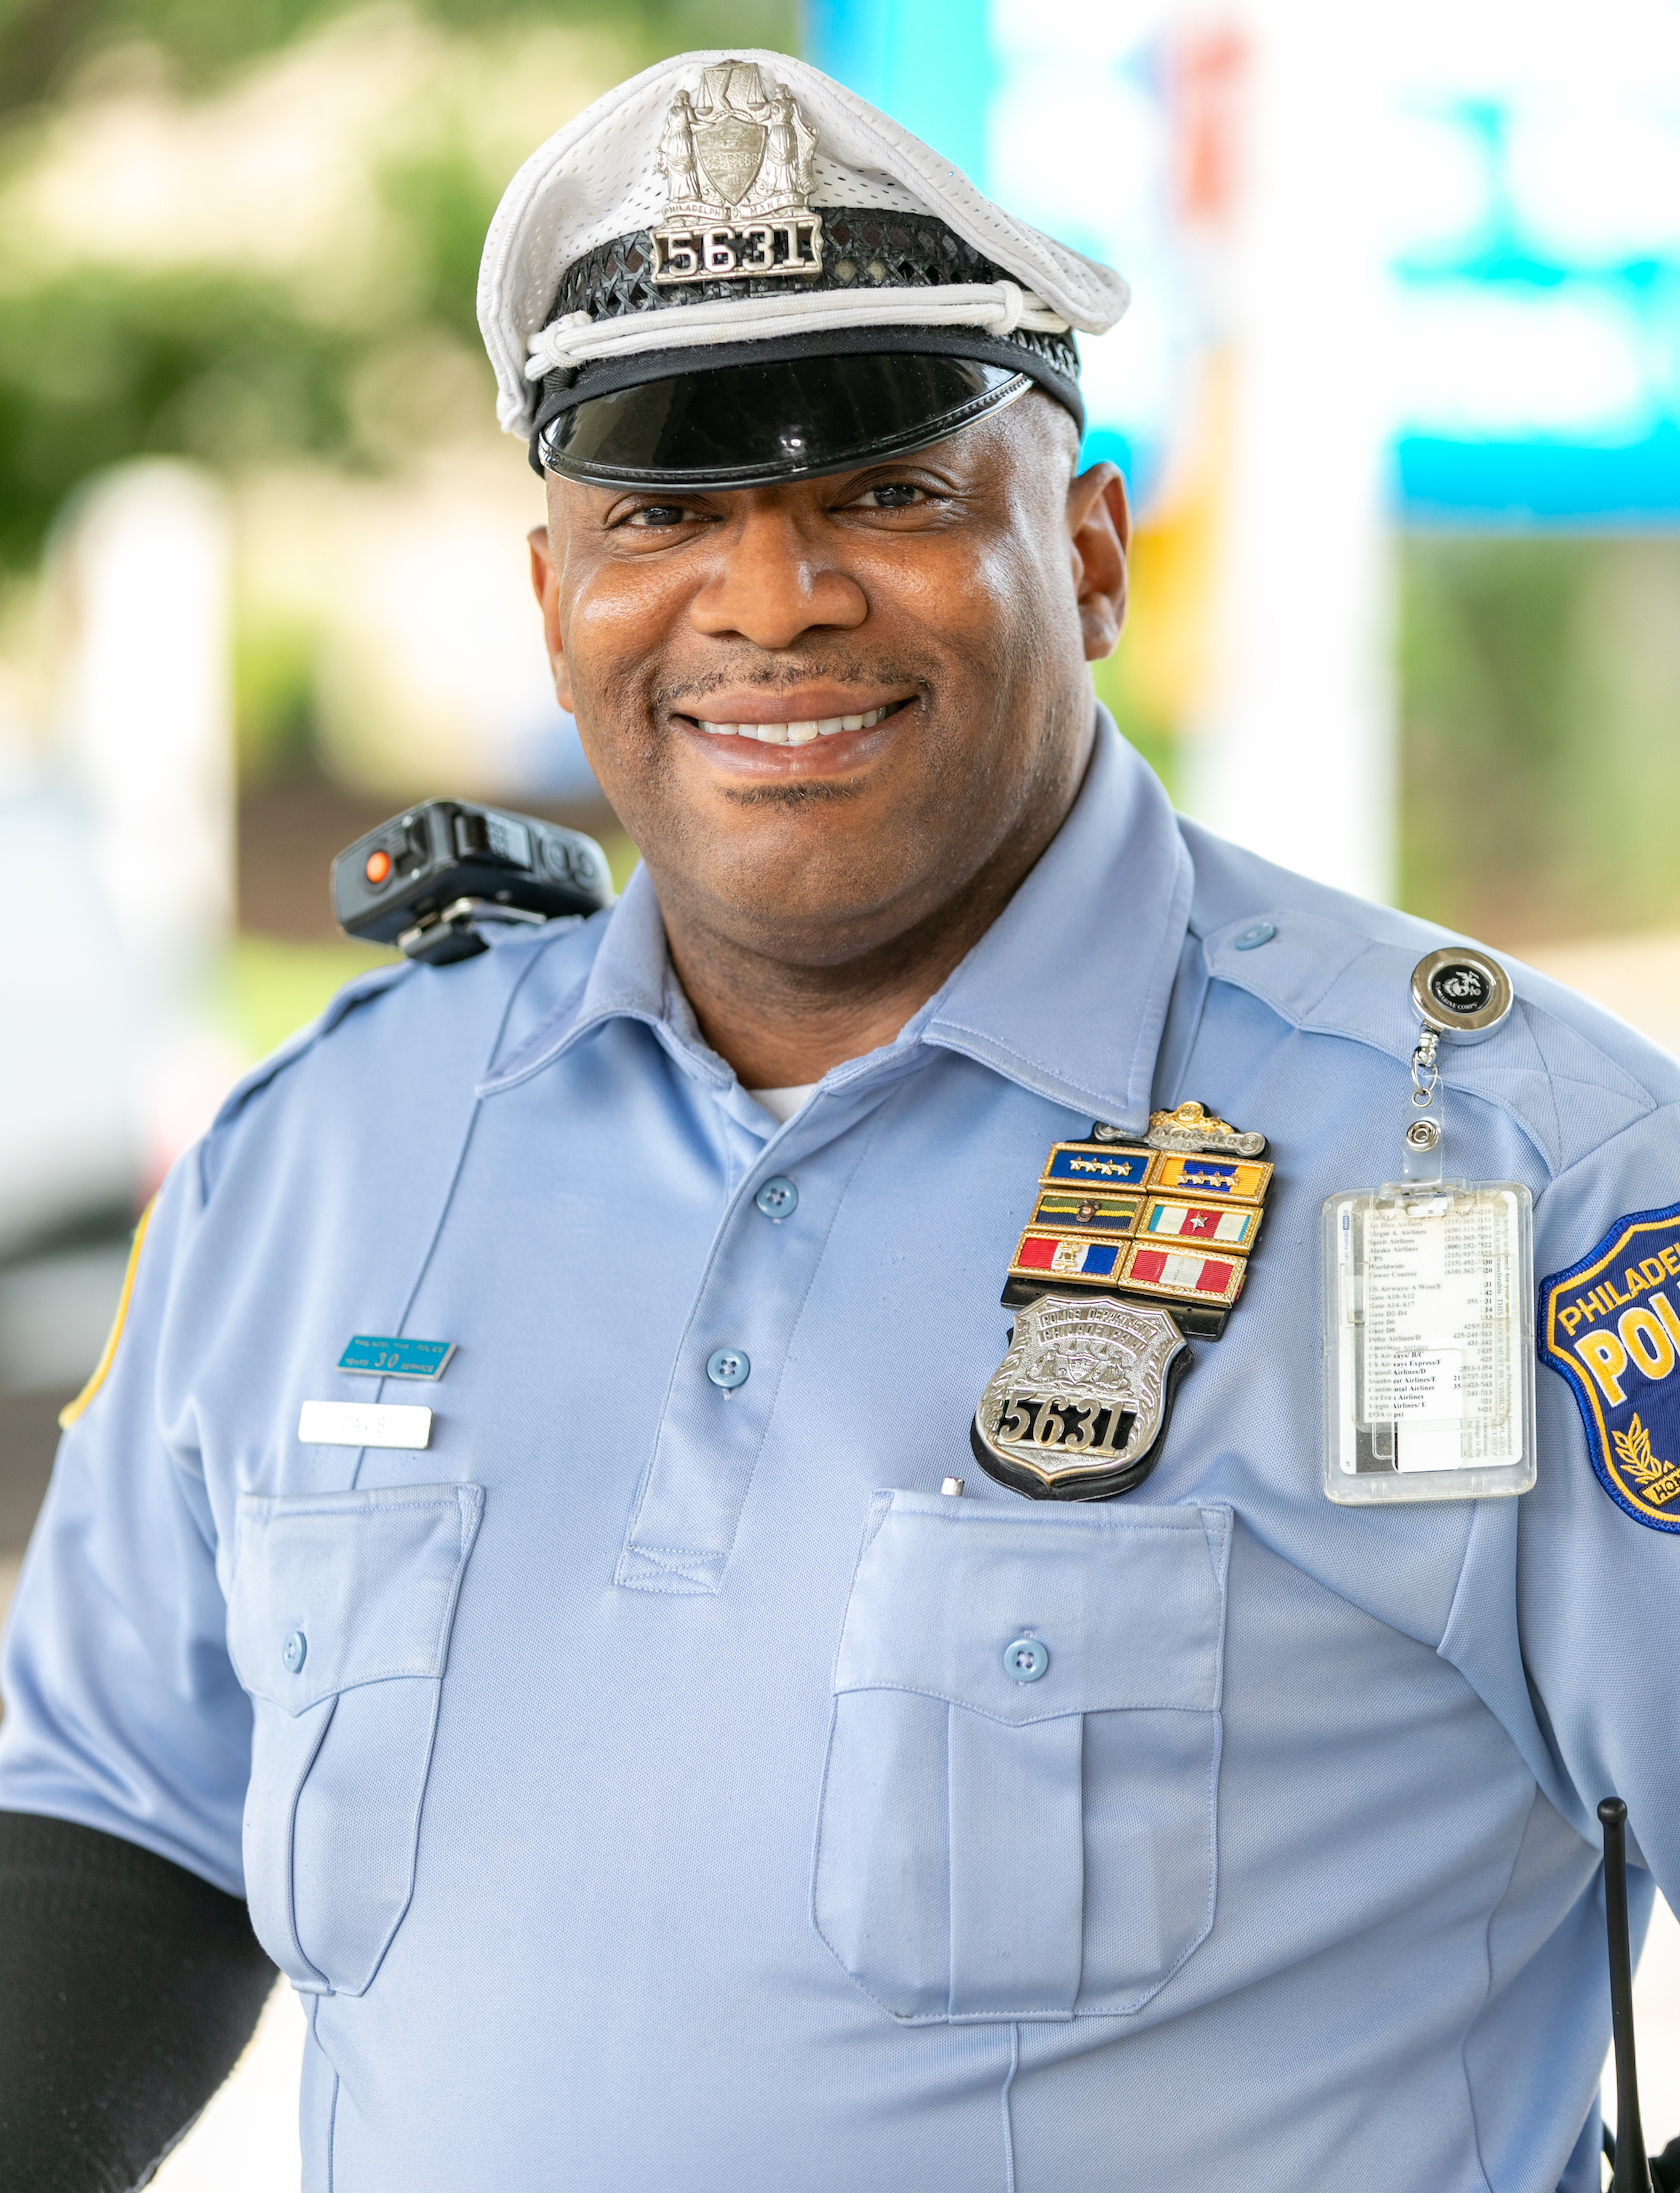 Officer Daniel Davis